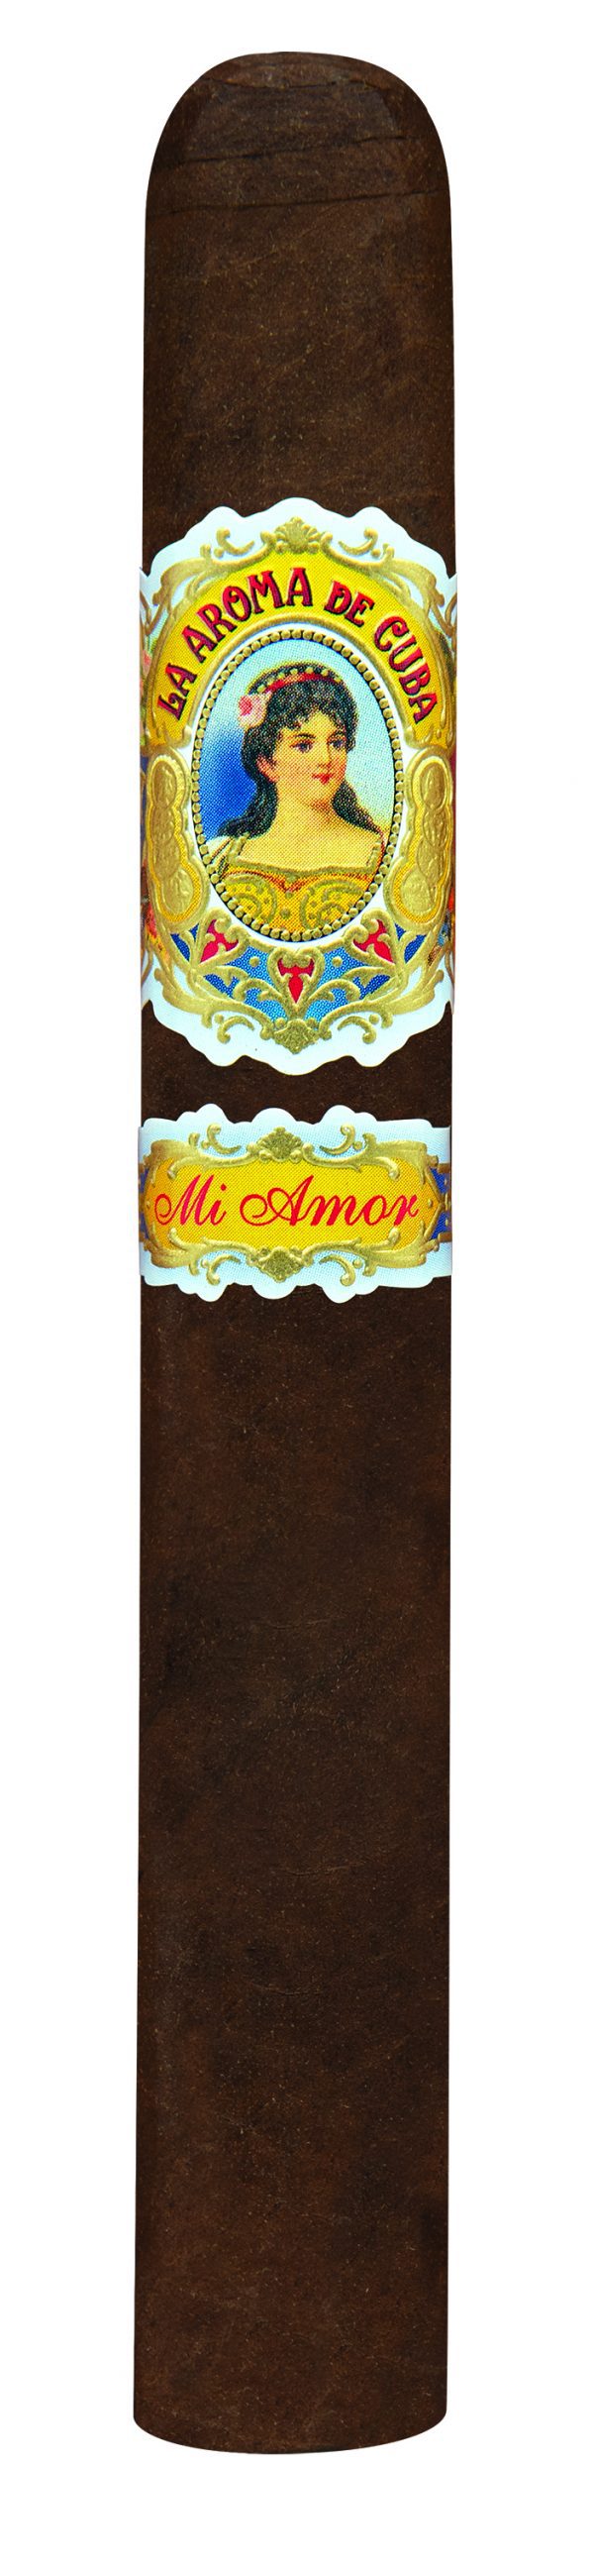 Single La Aroma de Cuba Mi Amor Magnifico cigar